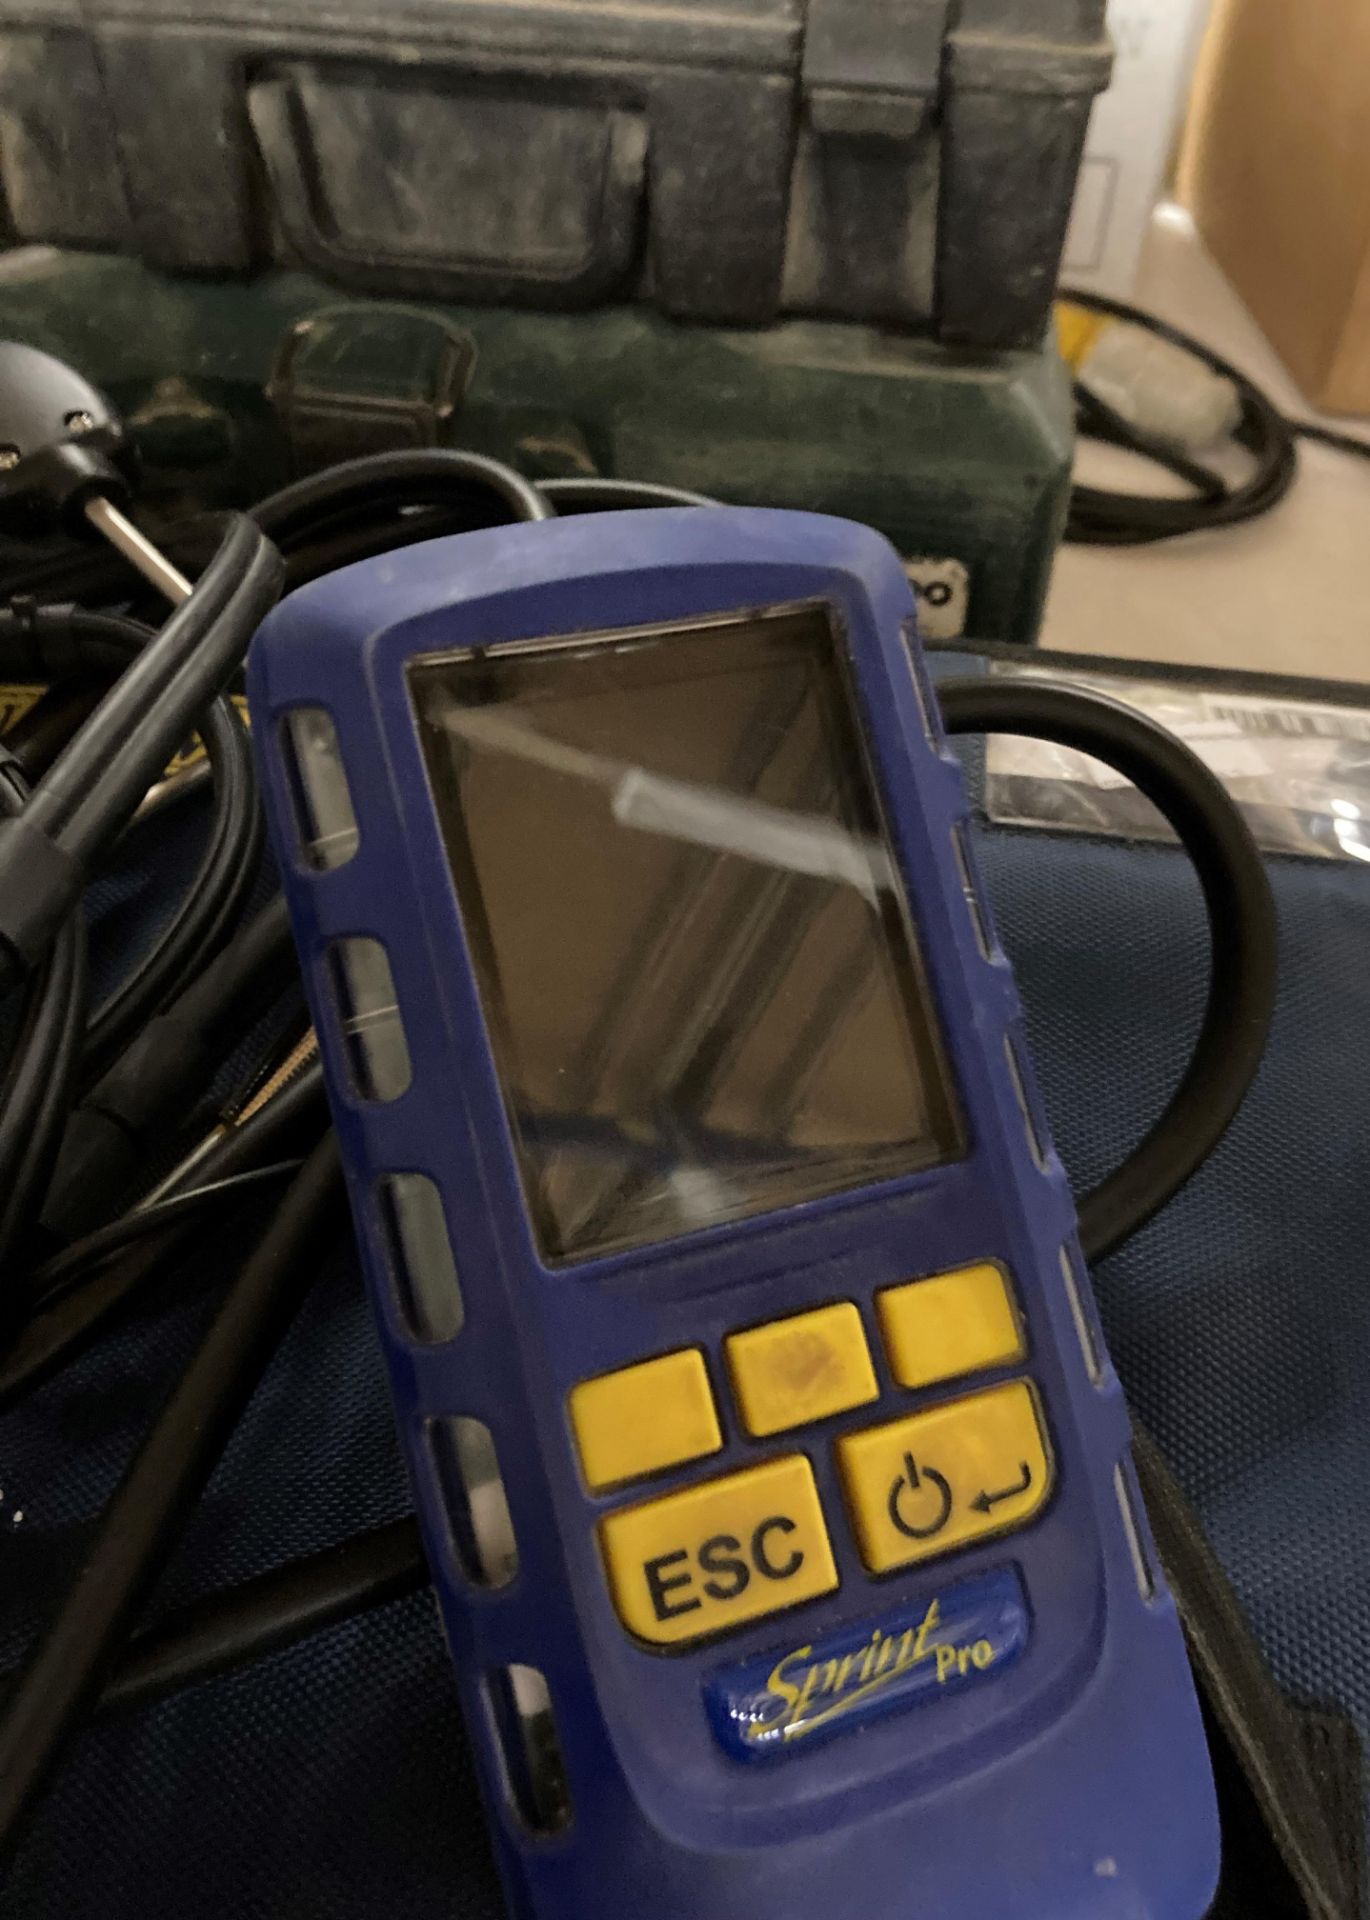 Anton Sprint Pro 1 Flue Gas Analyser in case with accessories (saleroom location: G07) - Image 5 of 5